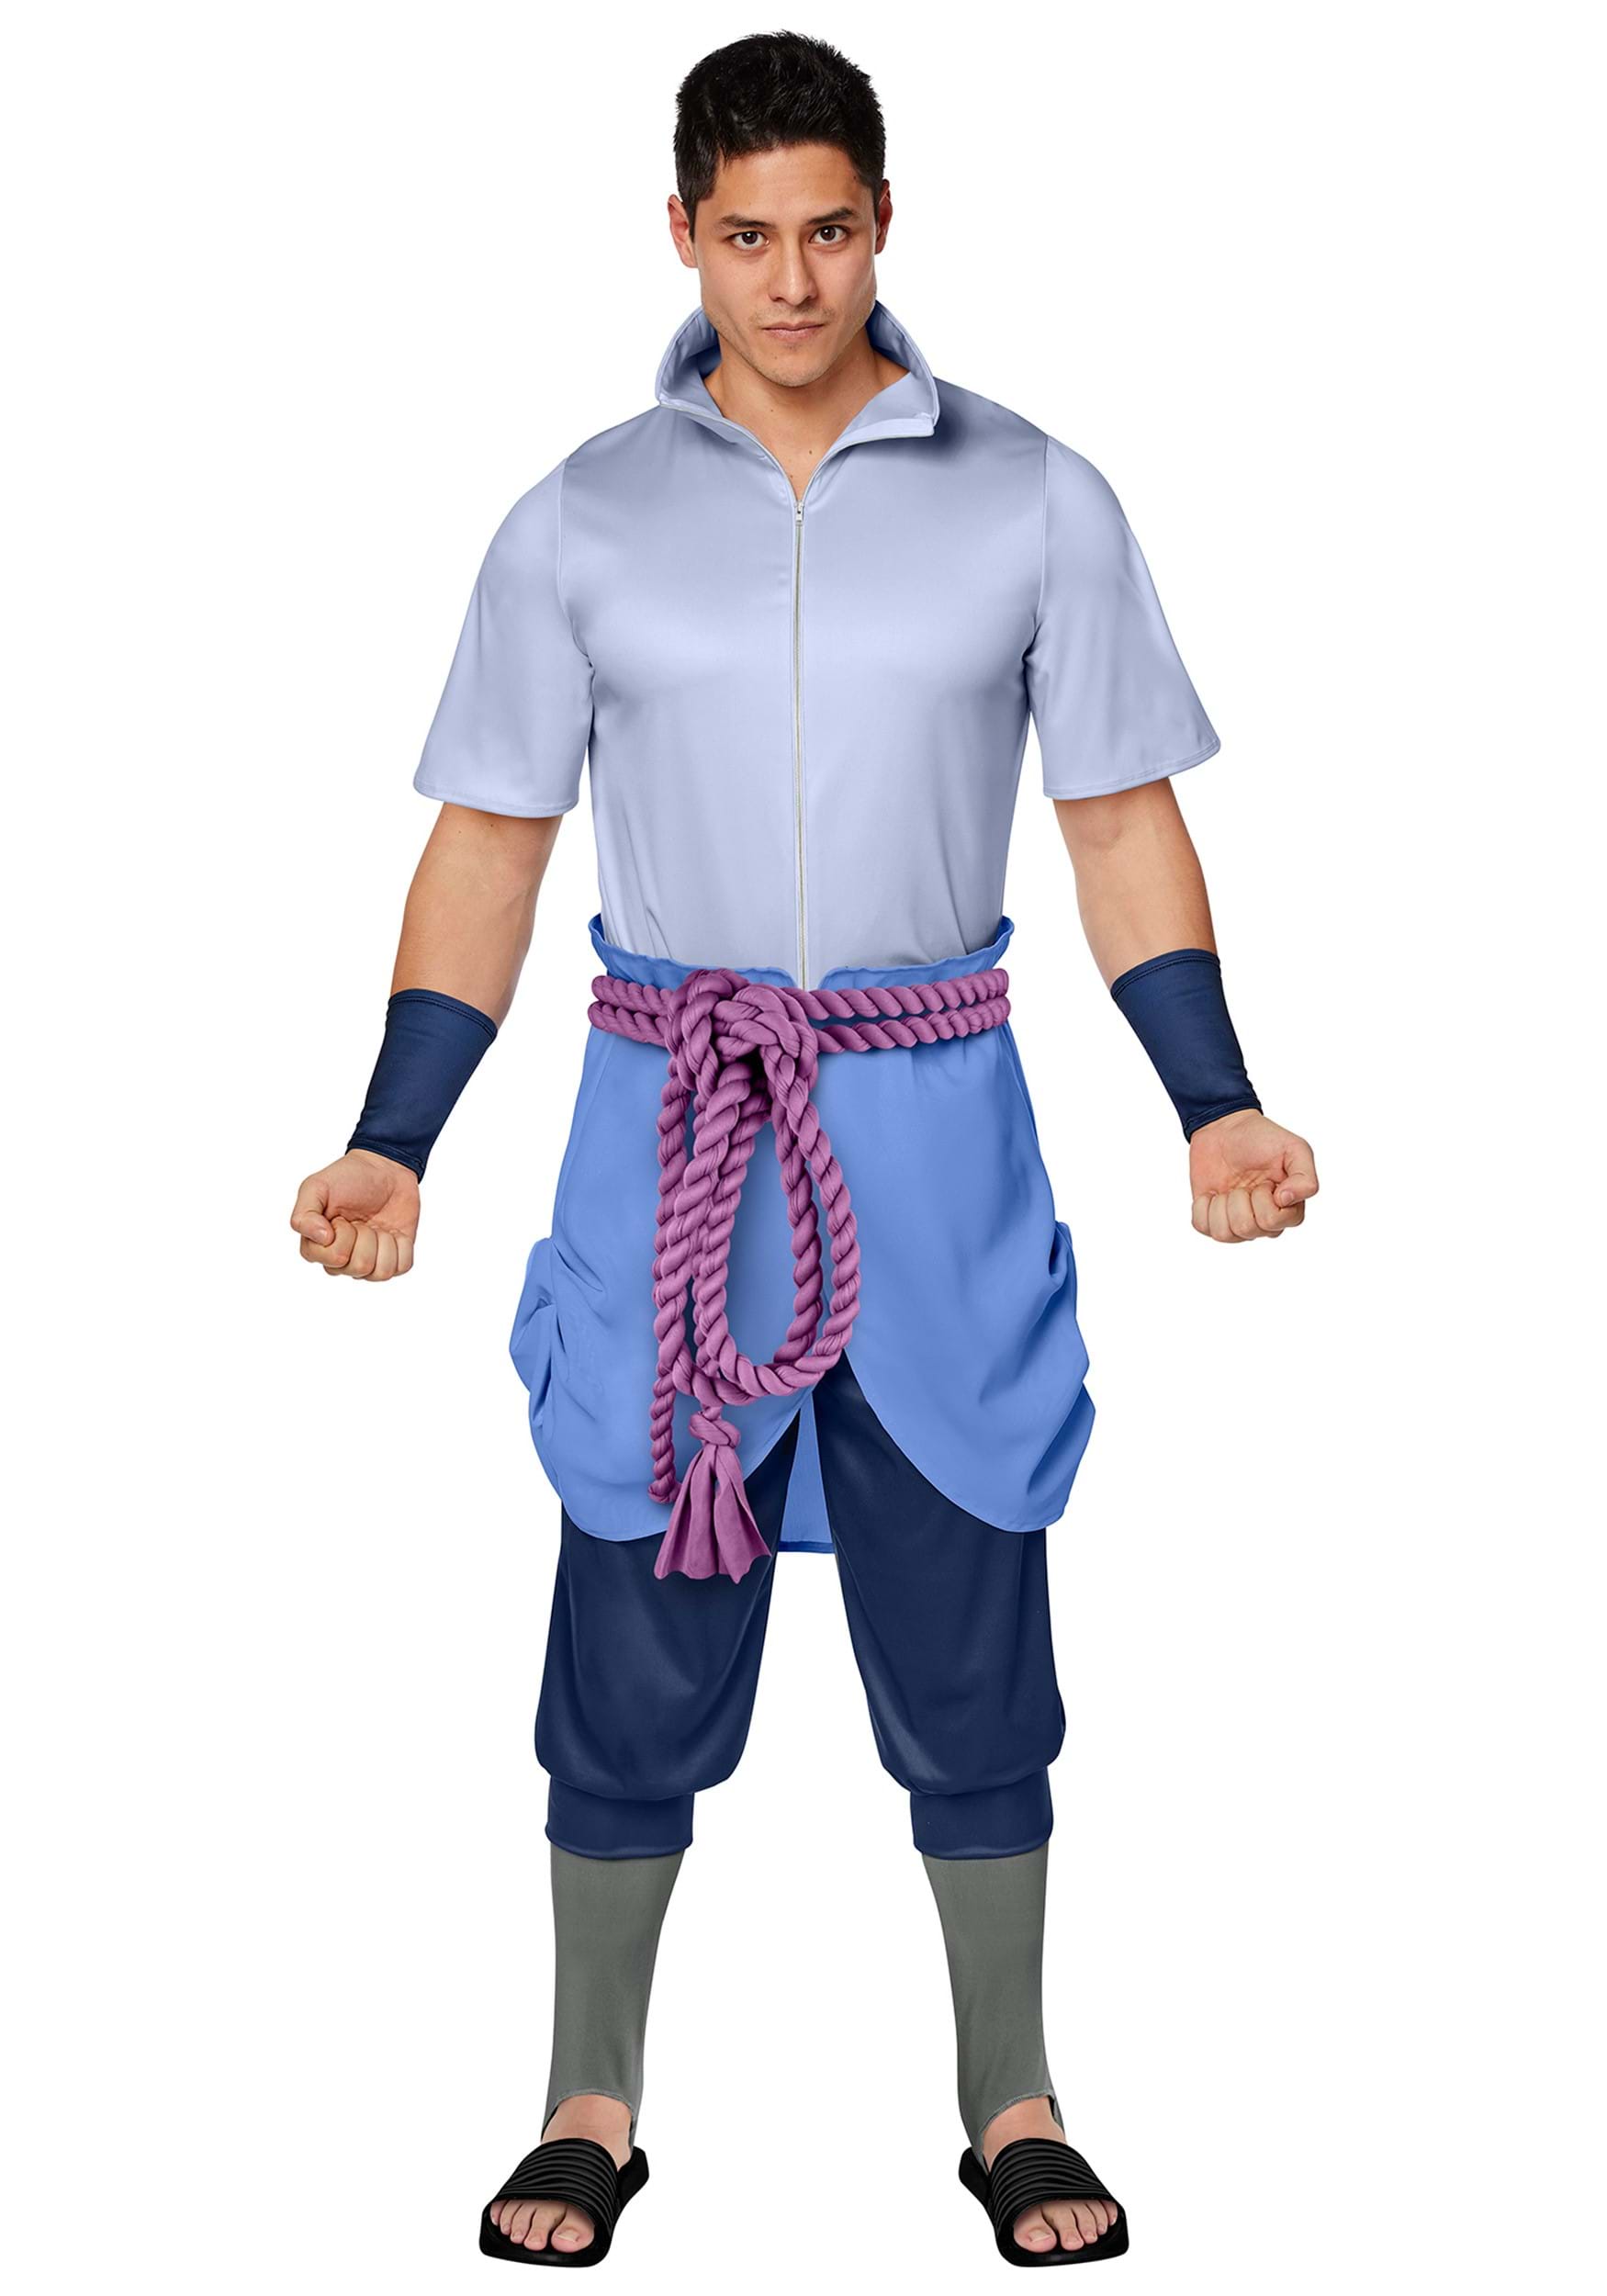 Sasuke Uchiha costume  Naruto and Naruto cosplay